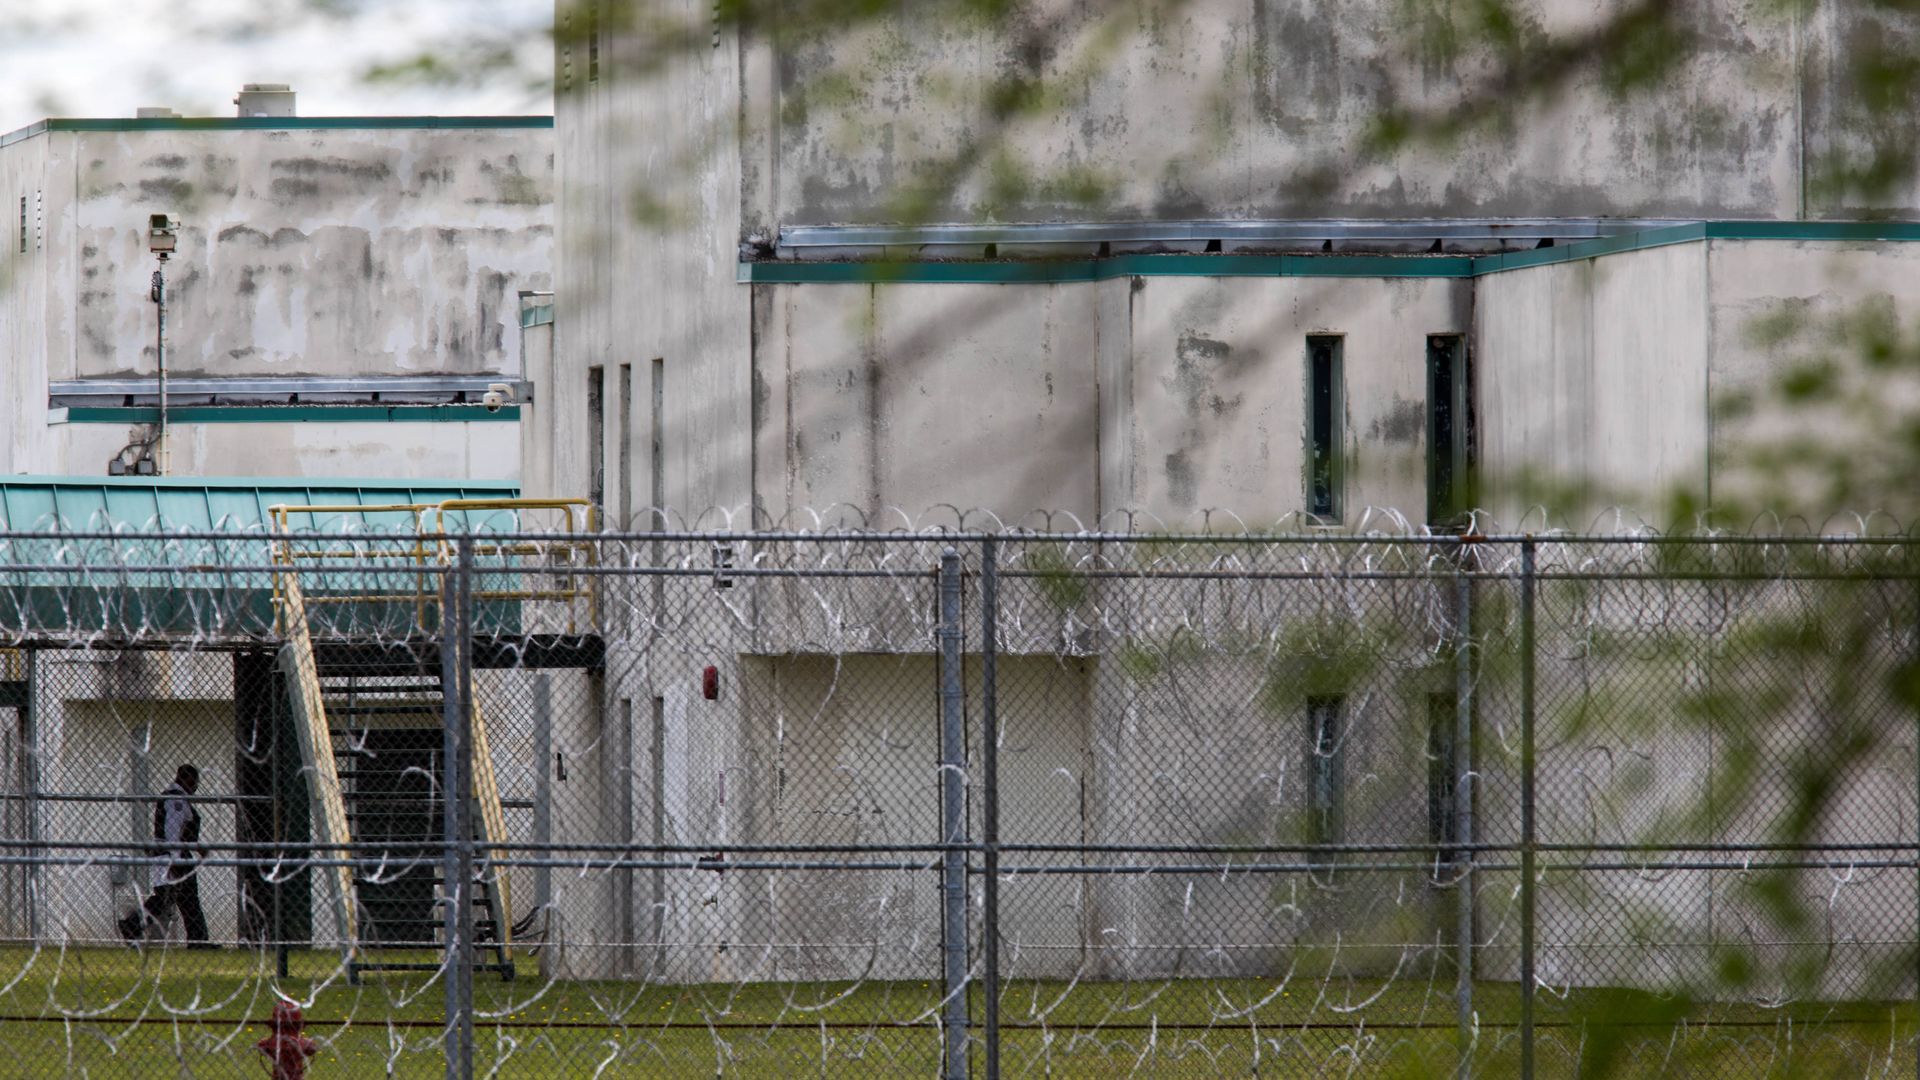 A prison guard runs into a correctional center viewed through a chainlink fence